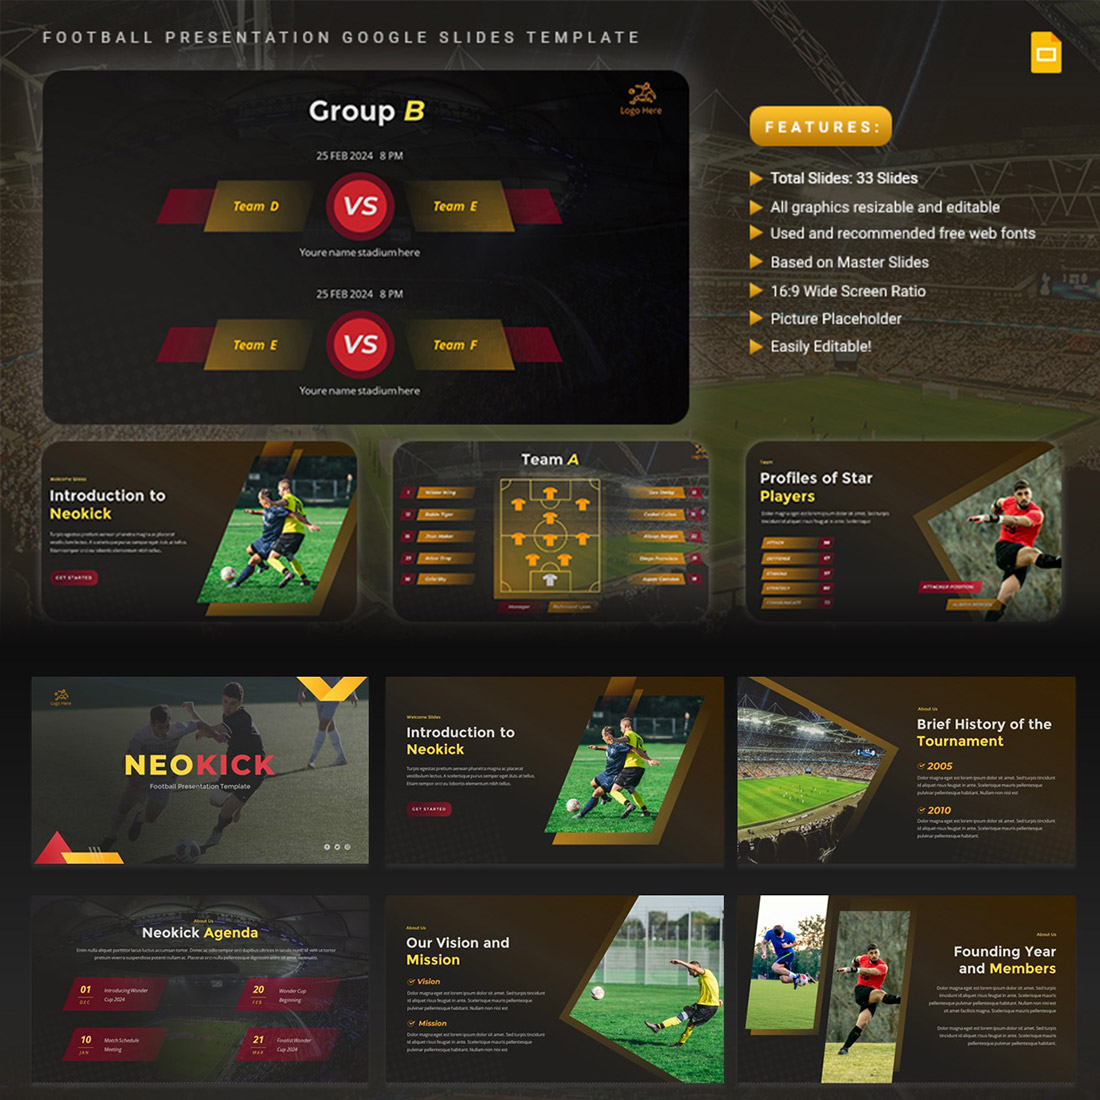 Neokick - Football Presentation Google Slides Template cover image.